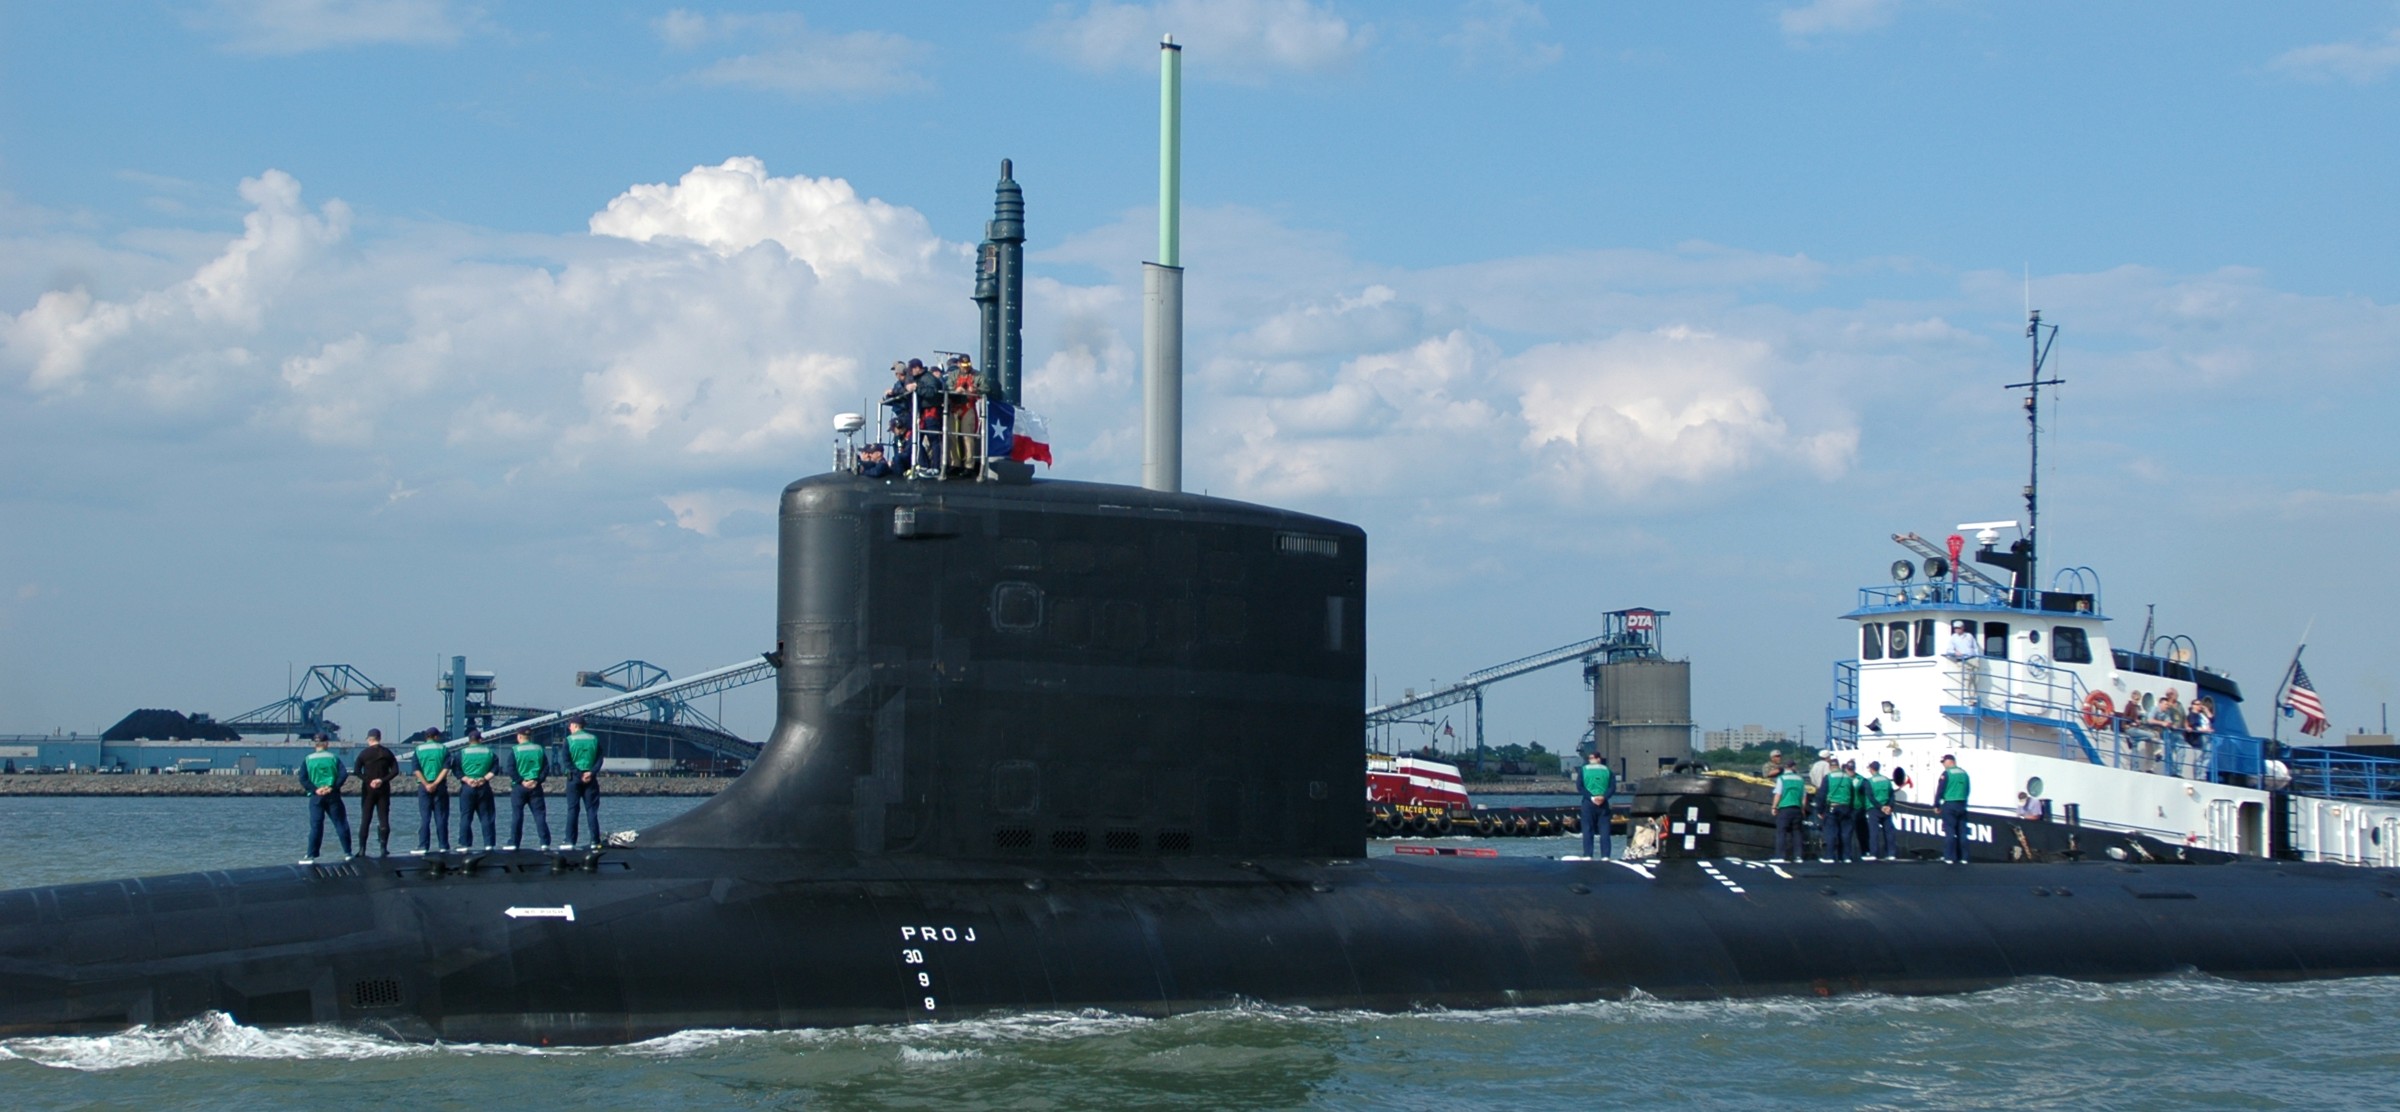 ssn-775 uss texas virginia class attack submarine navy 2006 49 newport news shipbuilding virginia